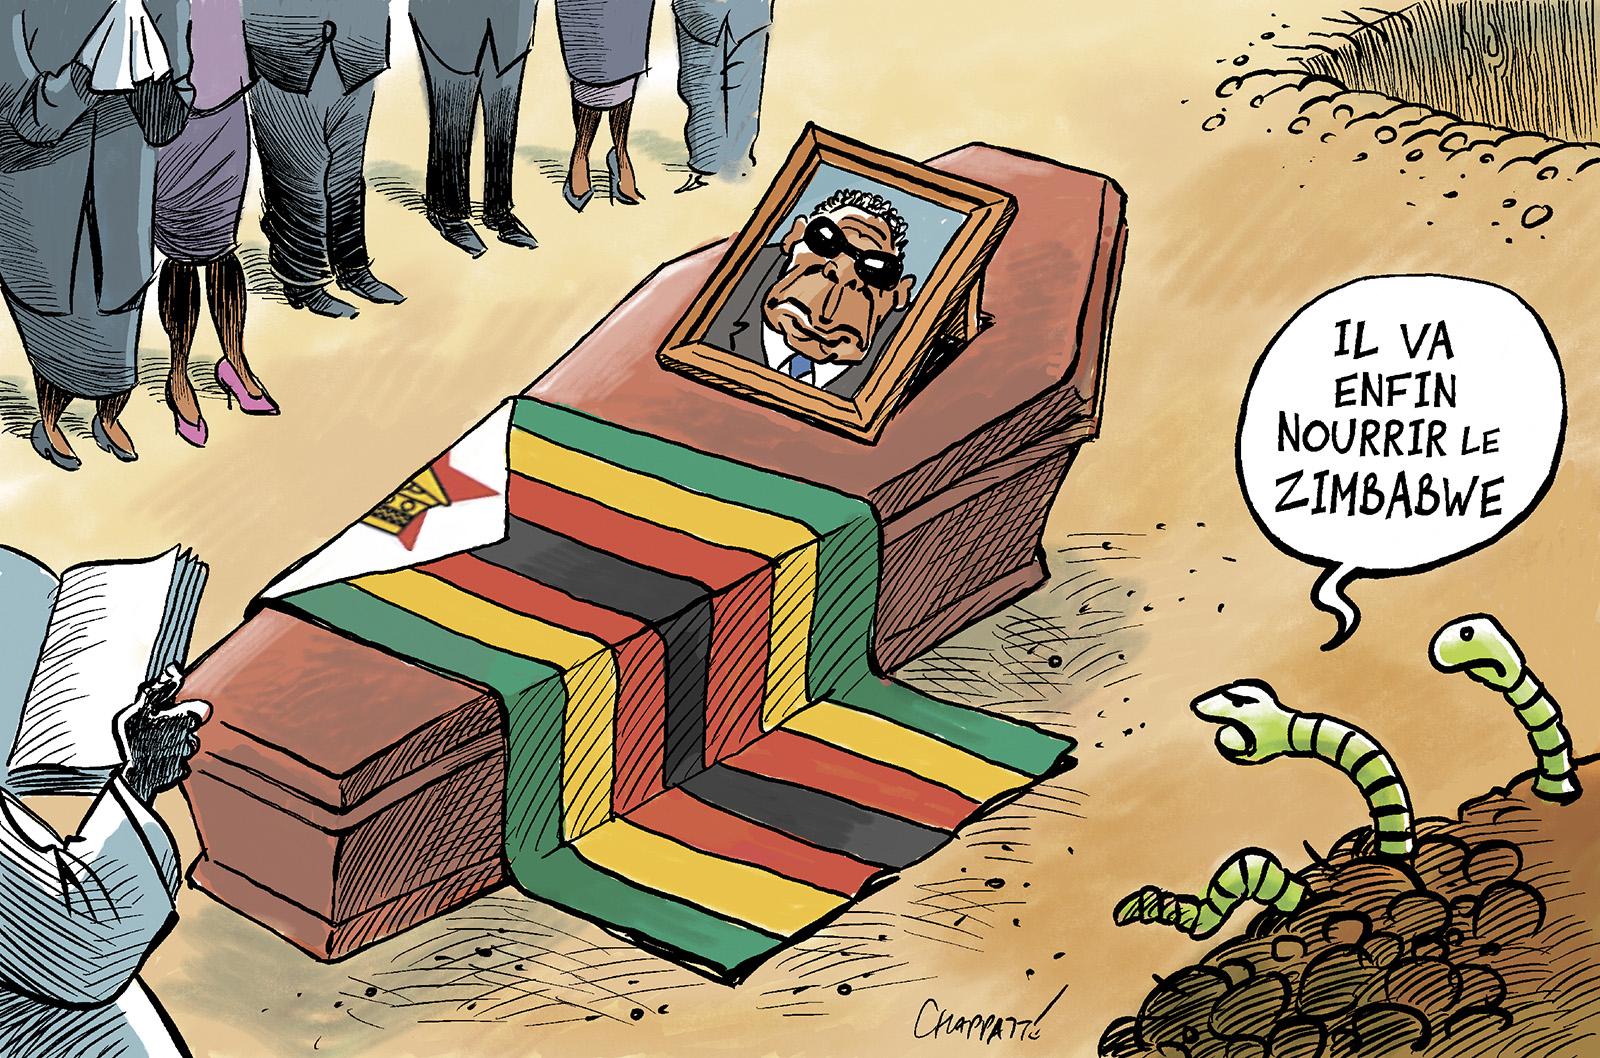 Mort de Robert Mugabe